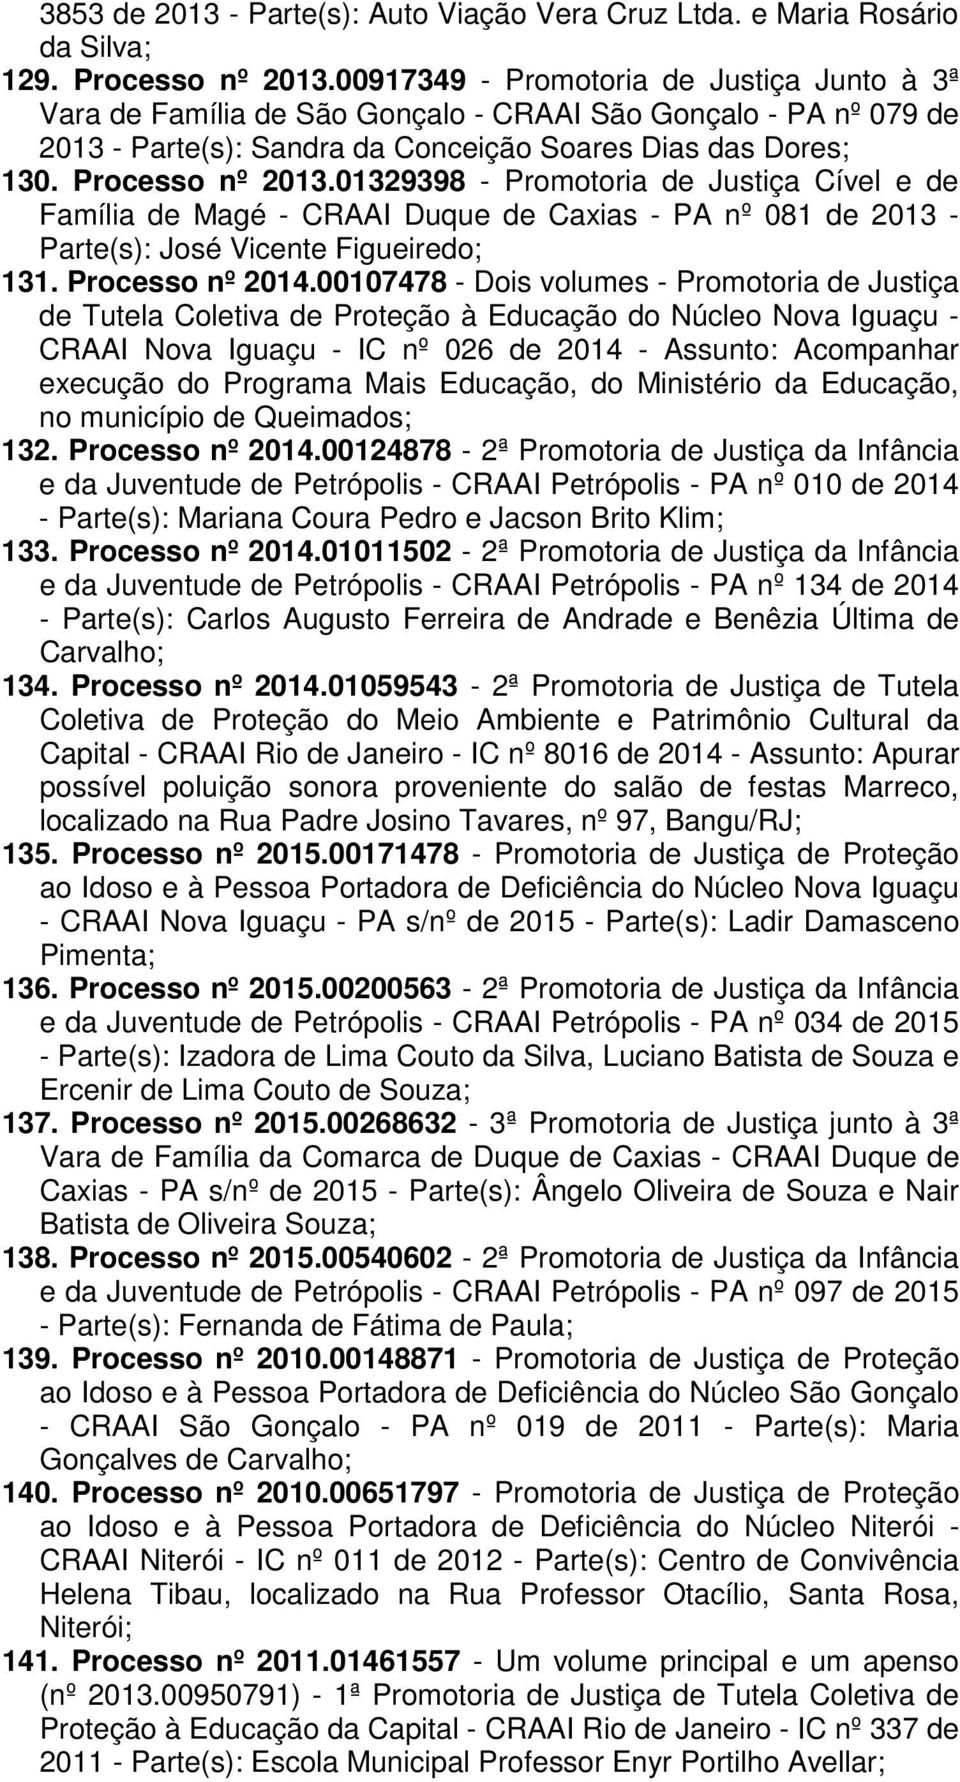 01329398 - Promotoria de Justiça Cível e de Família de Magé - CRAAI Duque de Caxias - PA nº 081 de 2013 - Parte(s): José Vicente Figueiredo; 131. Processo nº 2014.